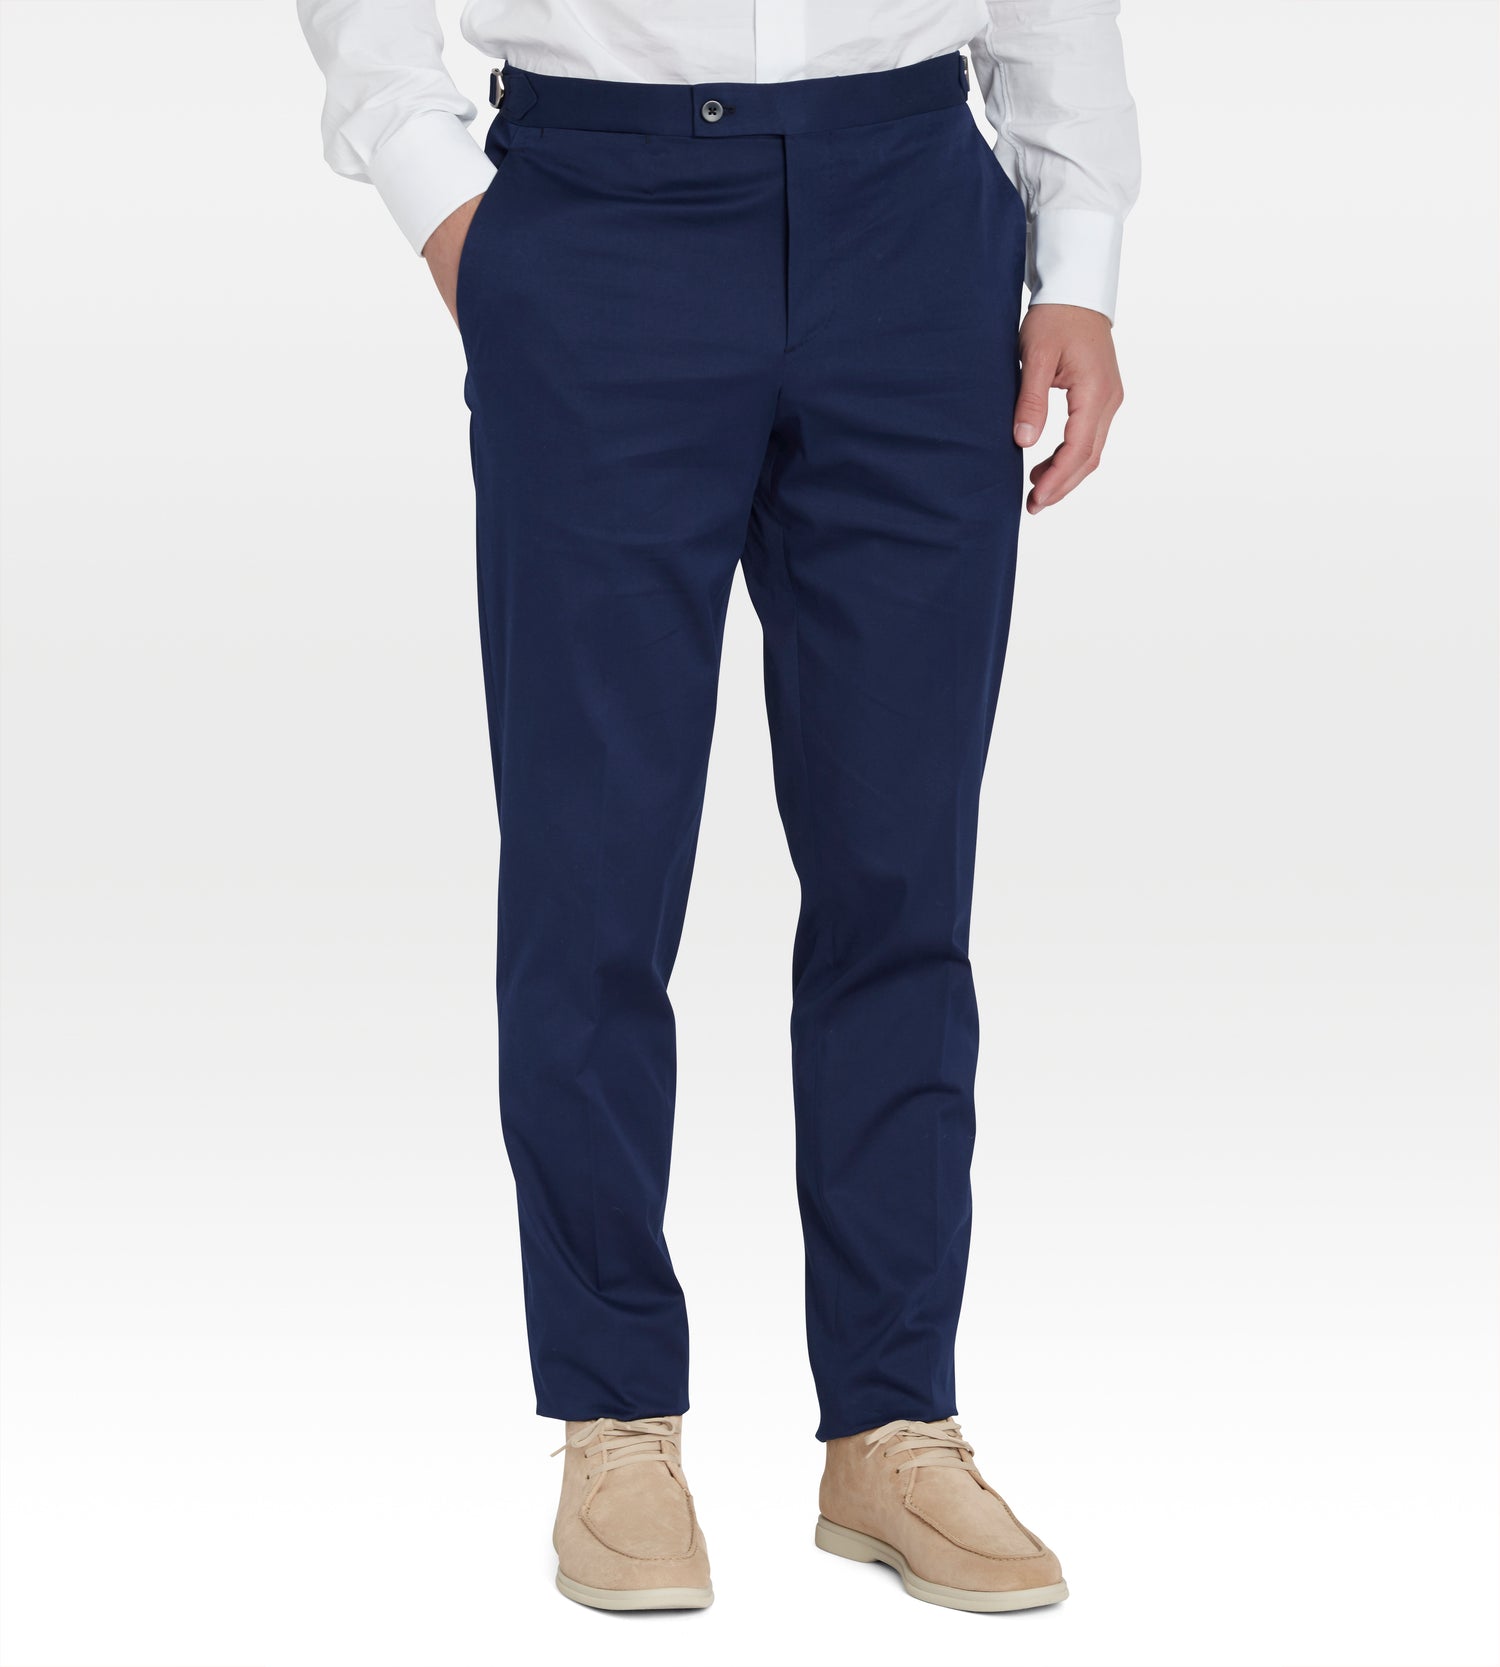 Pantalon classique en coton bleu marine